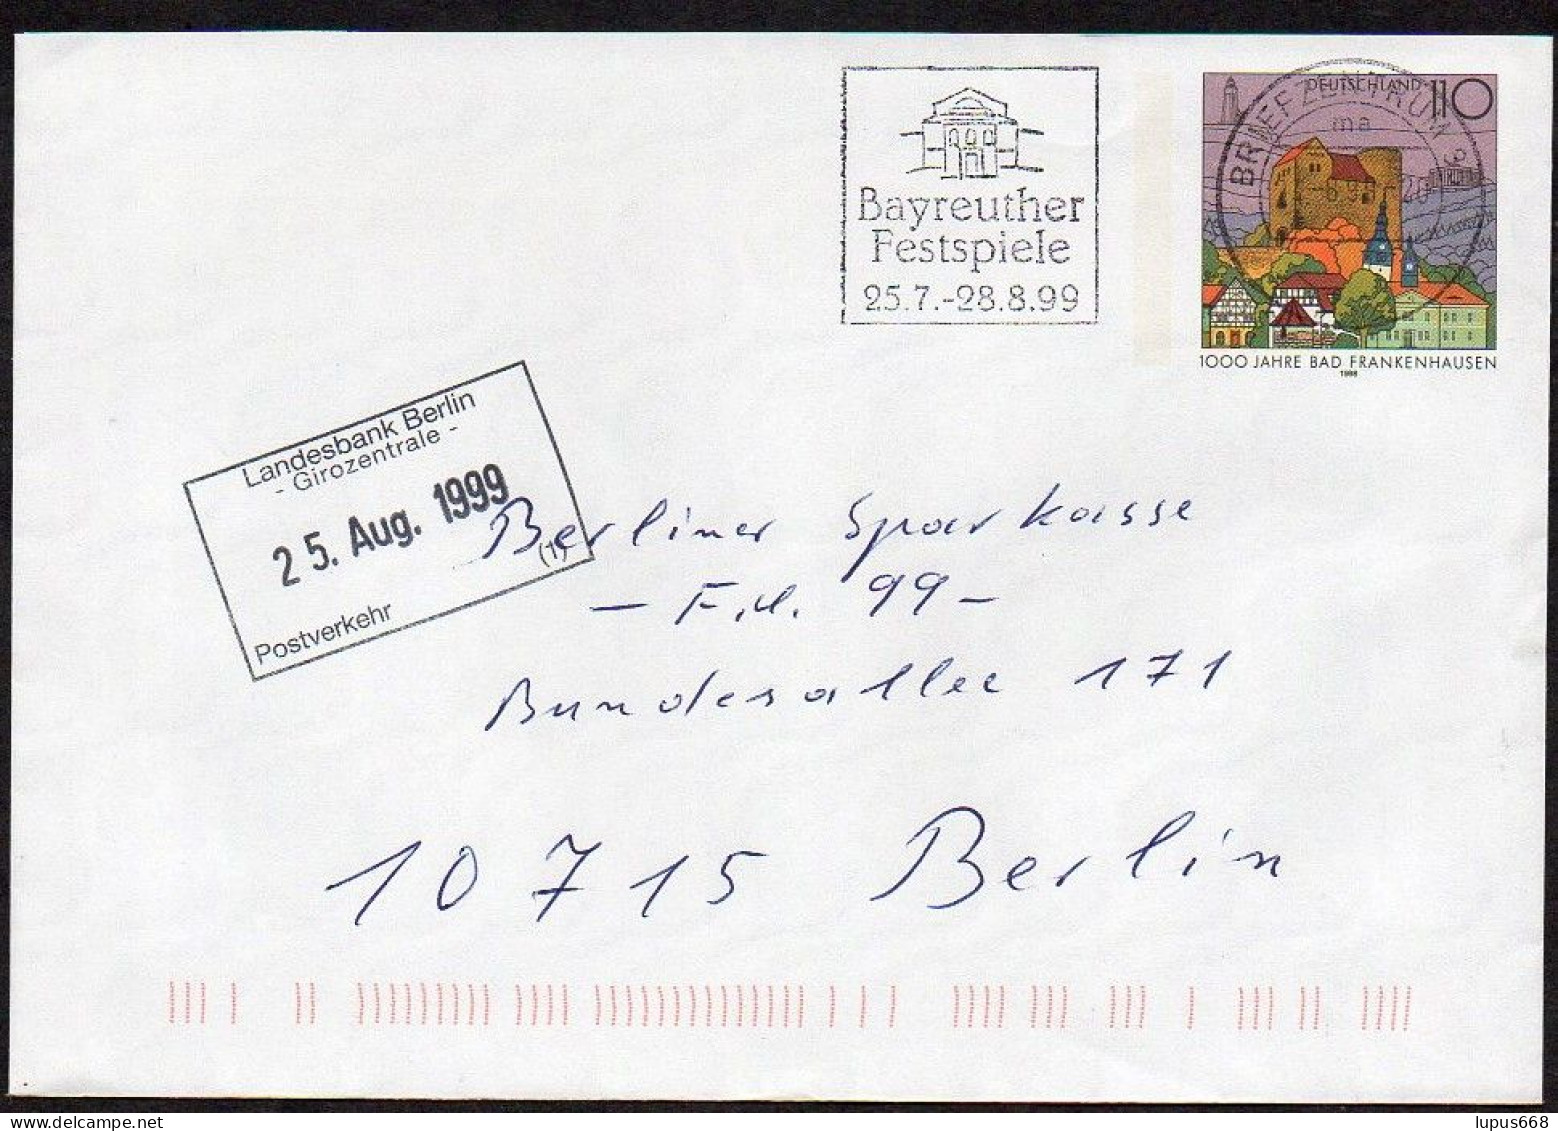 BRD 1999 Umschlag/ Entire Cover  O/ Used ,  Bad Frankenhausen O BZ 95  Bayreuther Festspiele - Covers - Used